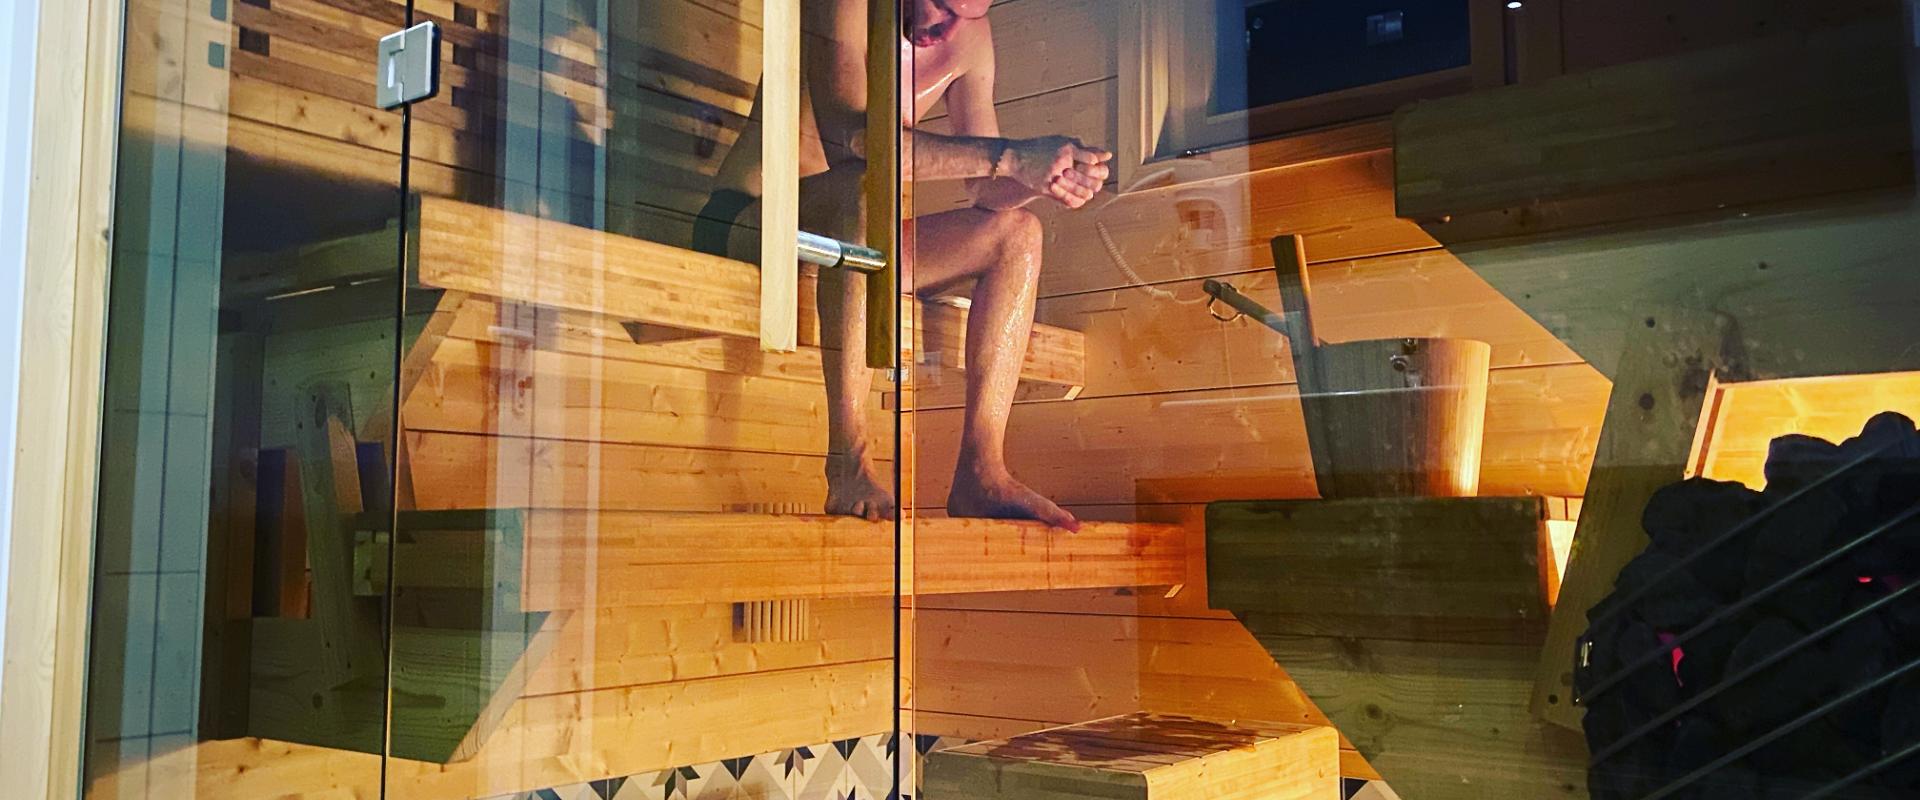 Karukella Holiday House, sauna and a person in the sauna